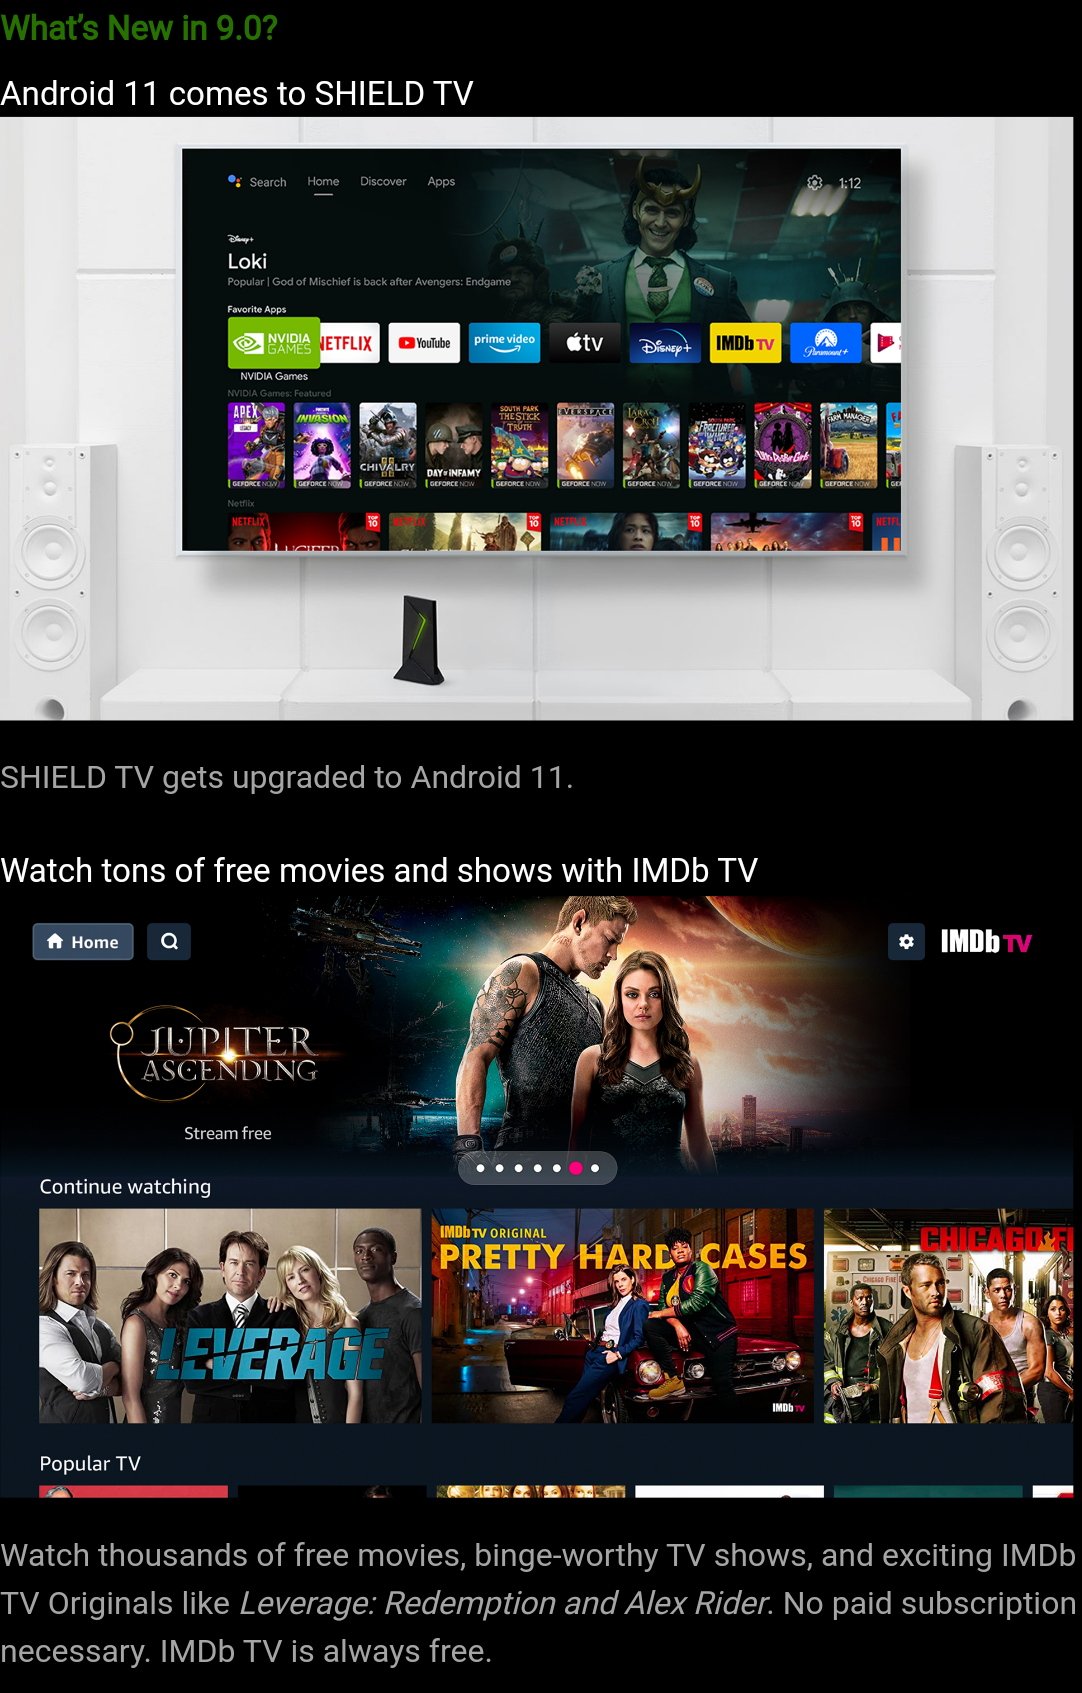 Android TV gets refreshed Google TV-like homescreen - FlatpanelsHD